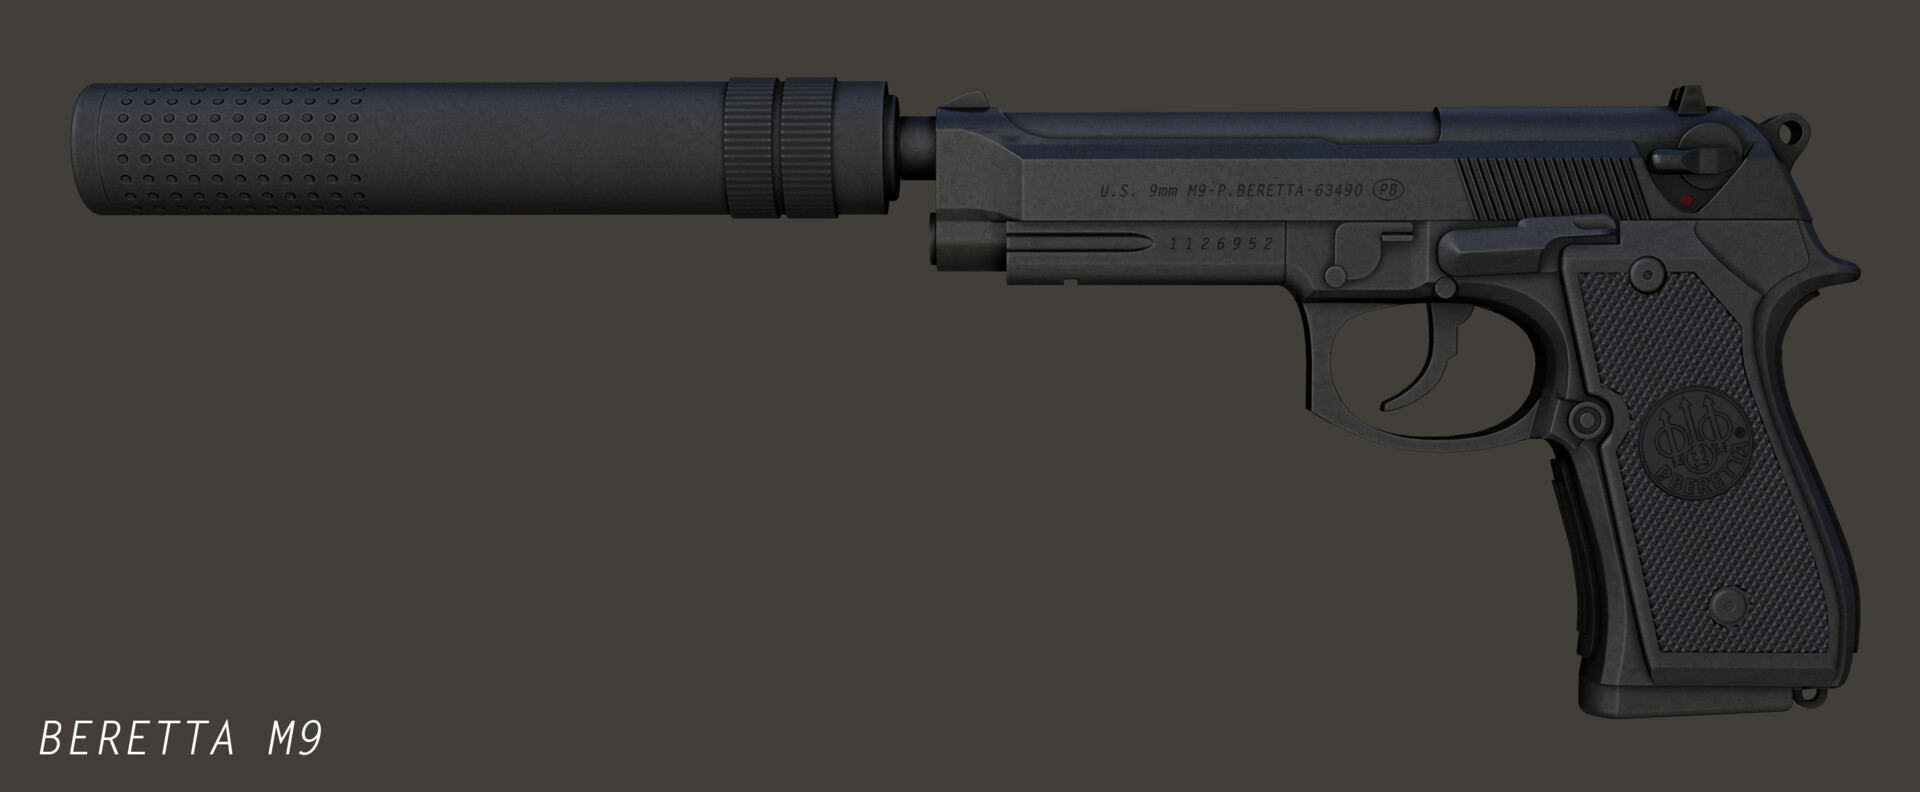 COD: MW (2019) Beretta M9A3 by CorvusCoalition01 on DeviantArt